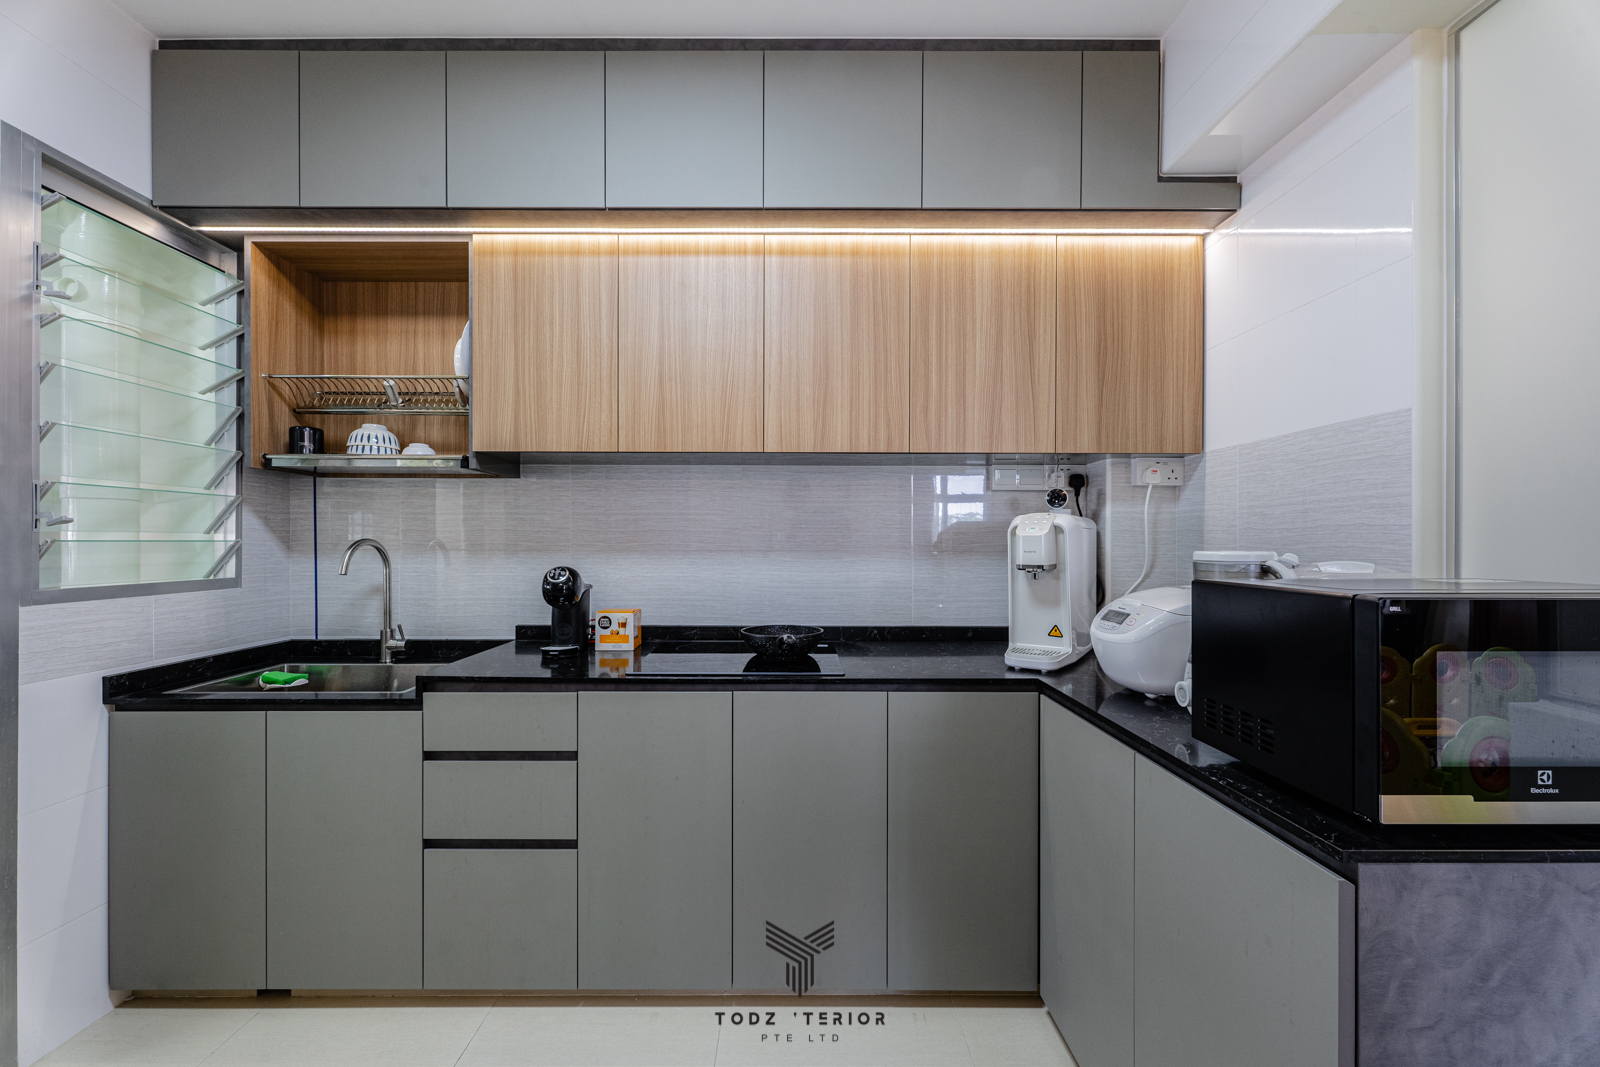 Trending Kitchen Design In Singapore On 2021 - Todz'Terior Best